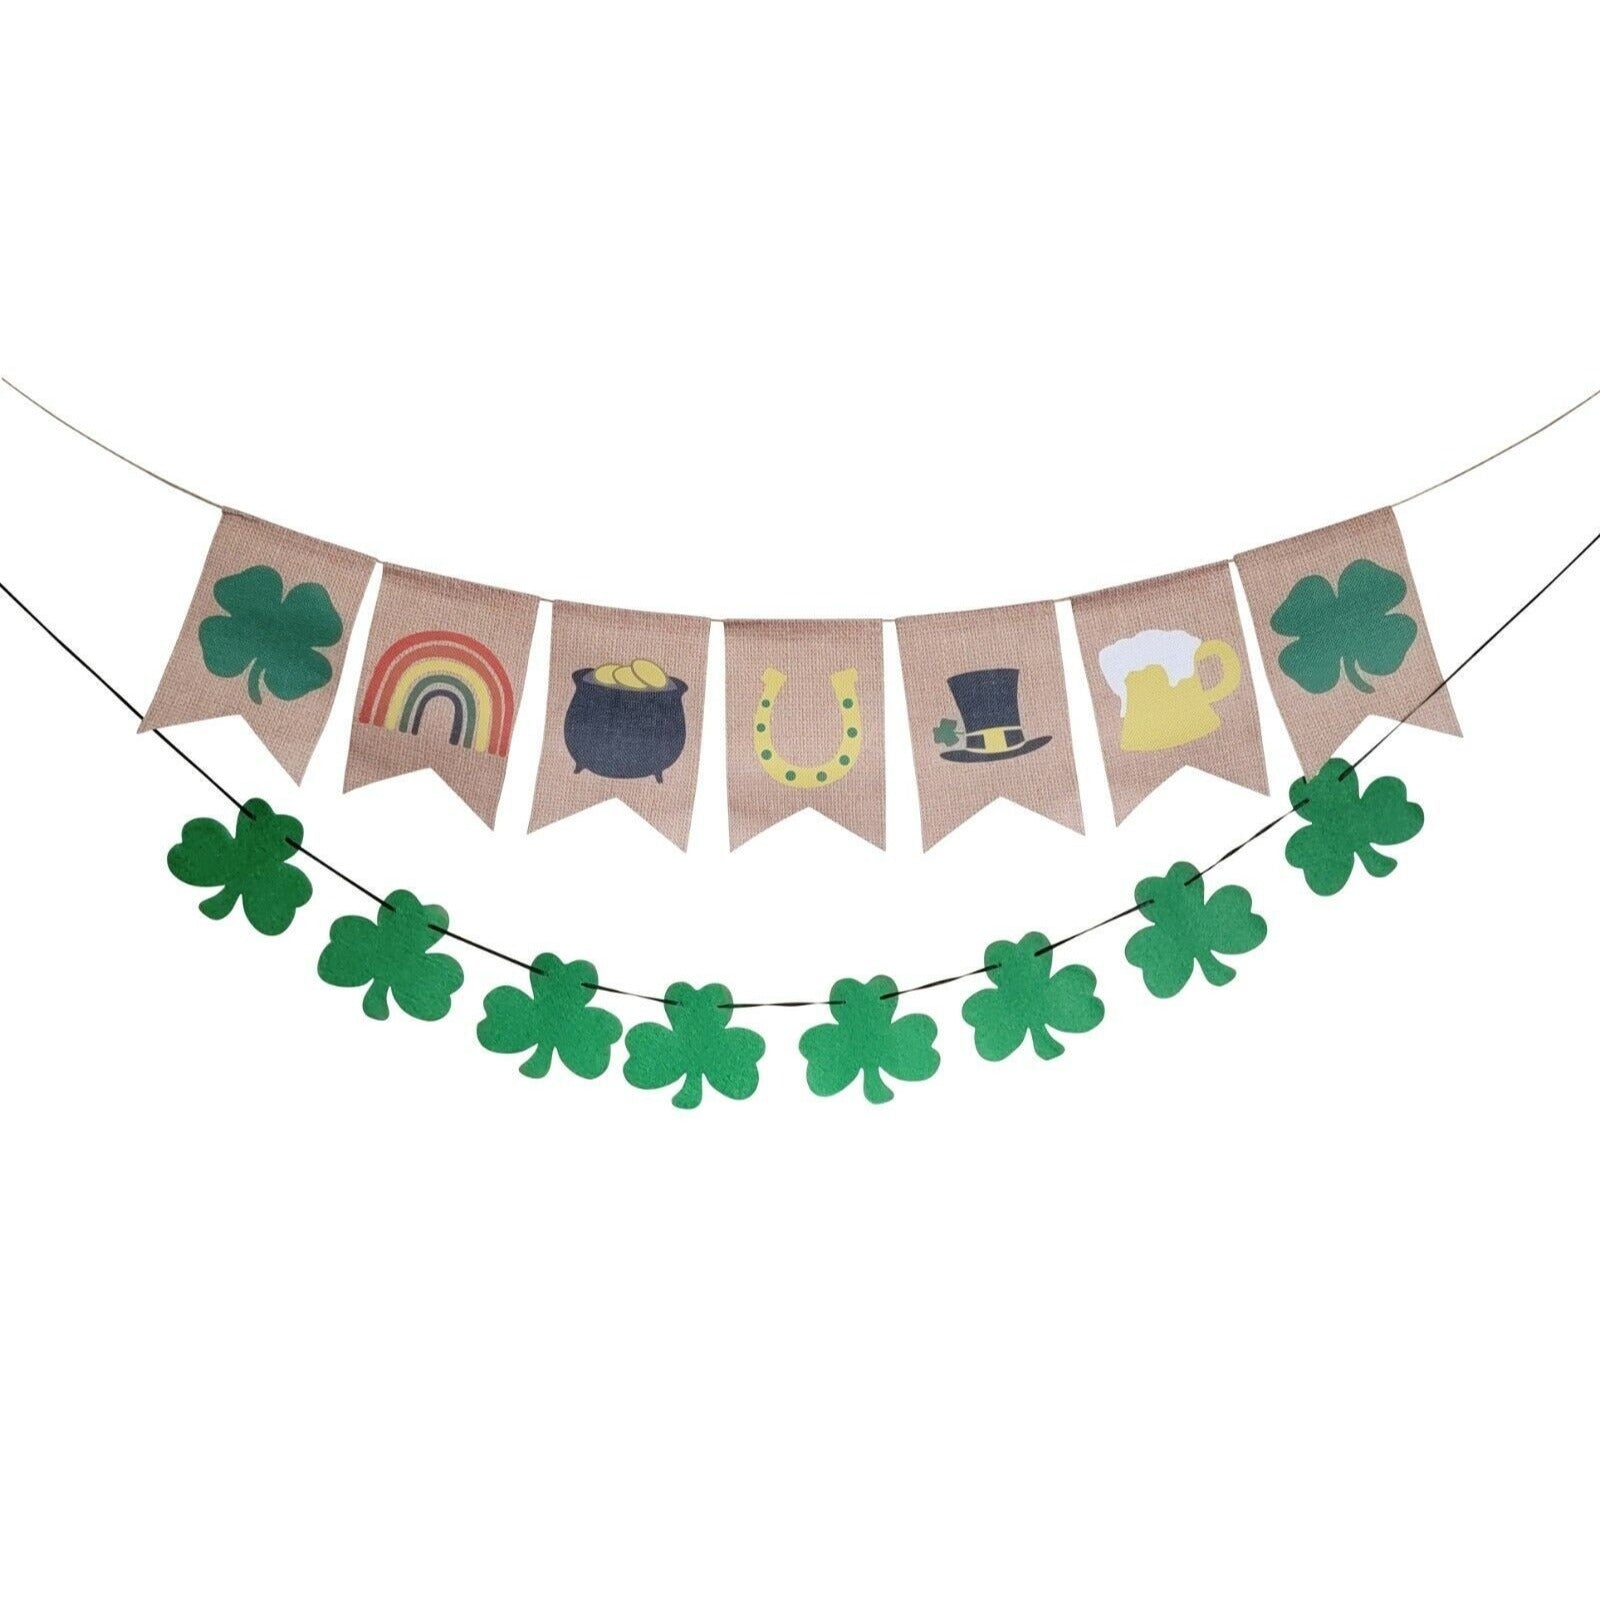 St Patrick's Day Banner with Felt Shamrocks - Saint Patricks Fireplace Mantle Garland